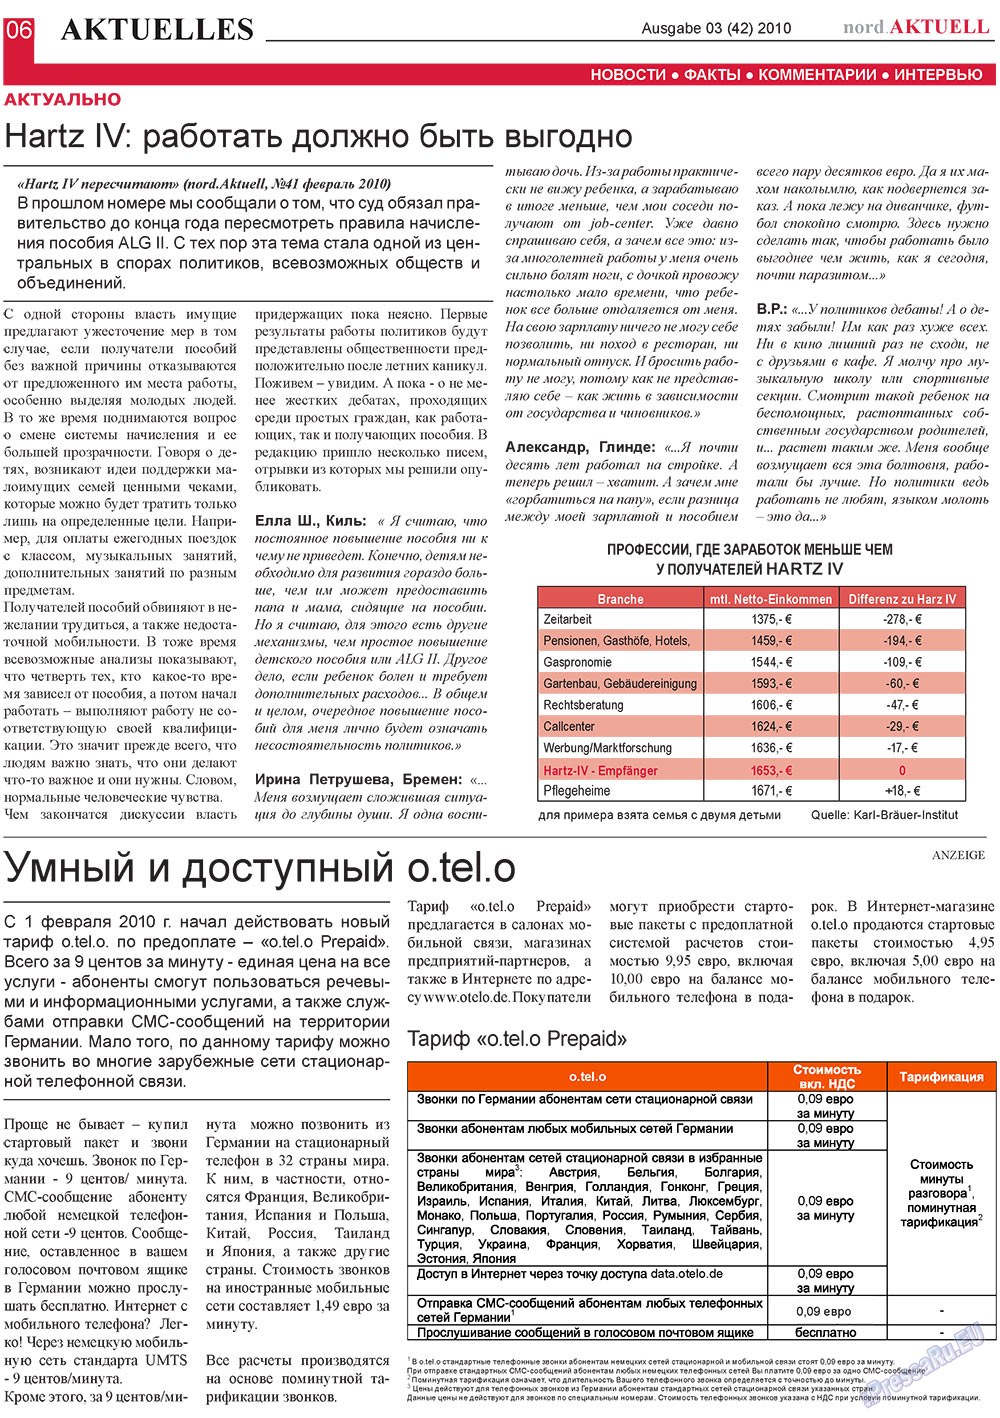 nord.Aktuell, газета. 2010 №3 стр.6